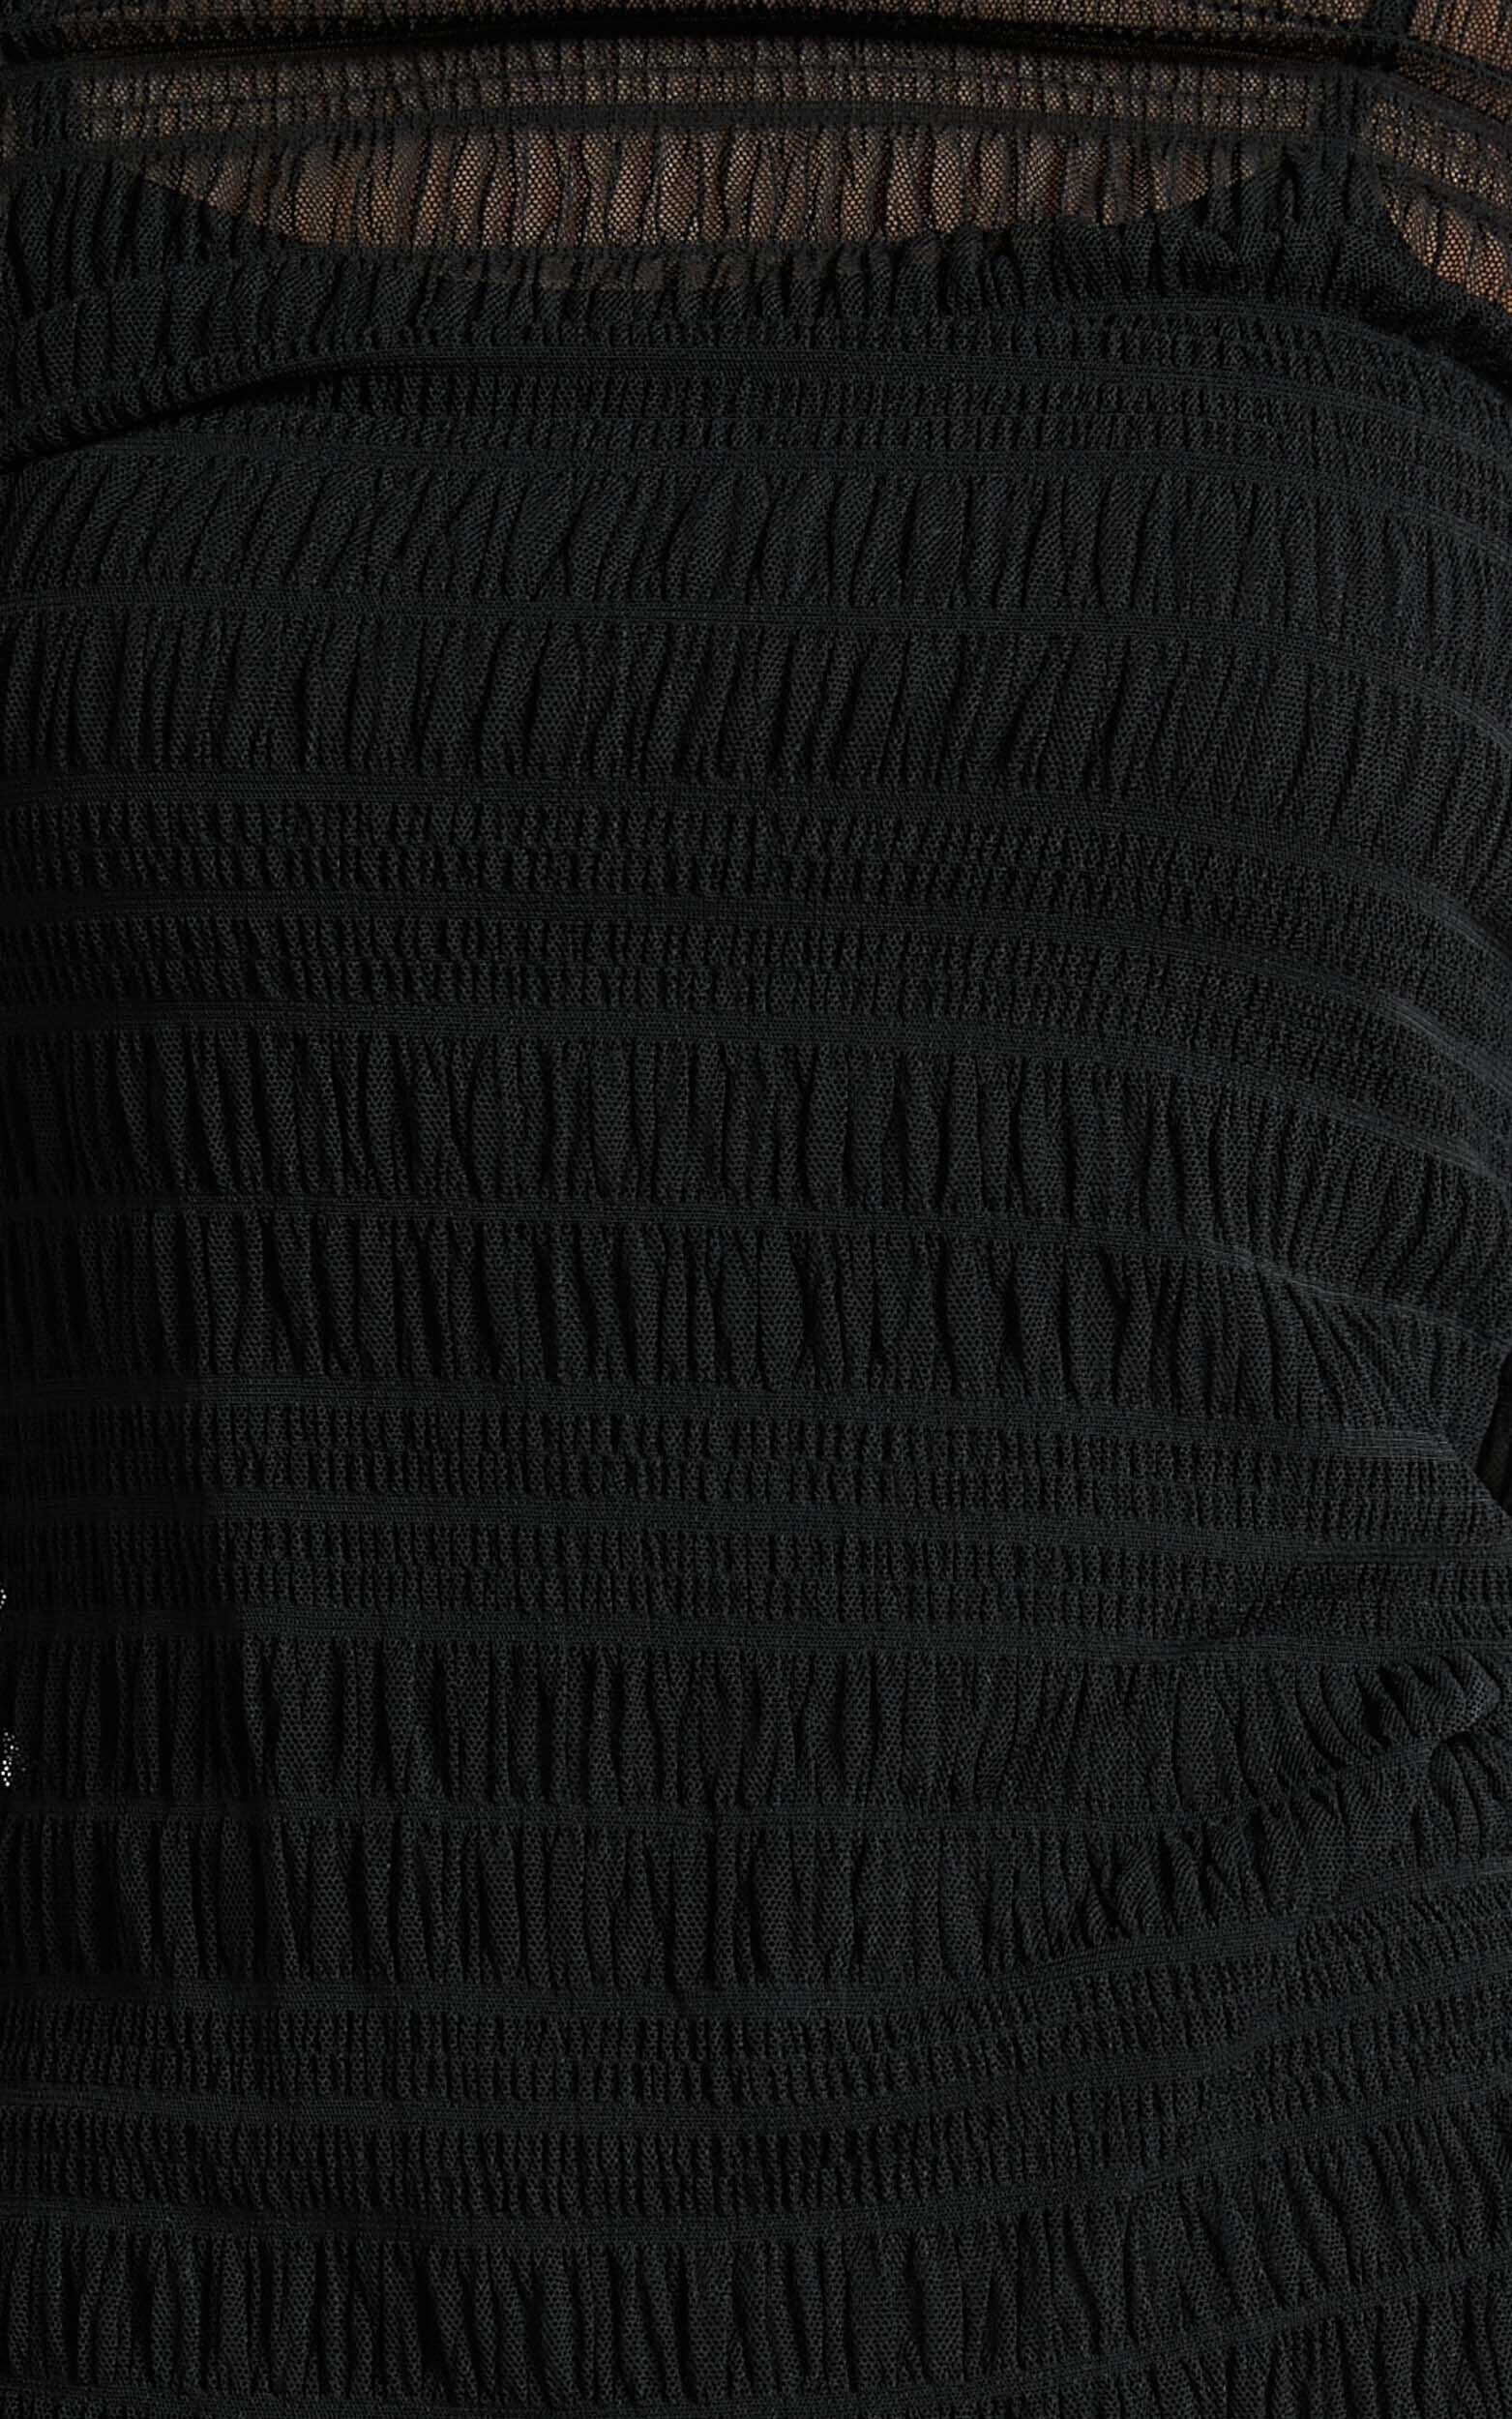 Black Mesh Sheer Mini Shirt Dress – Paxton Avery & Co